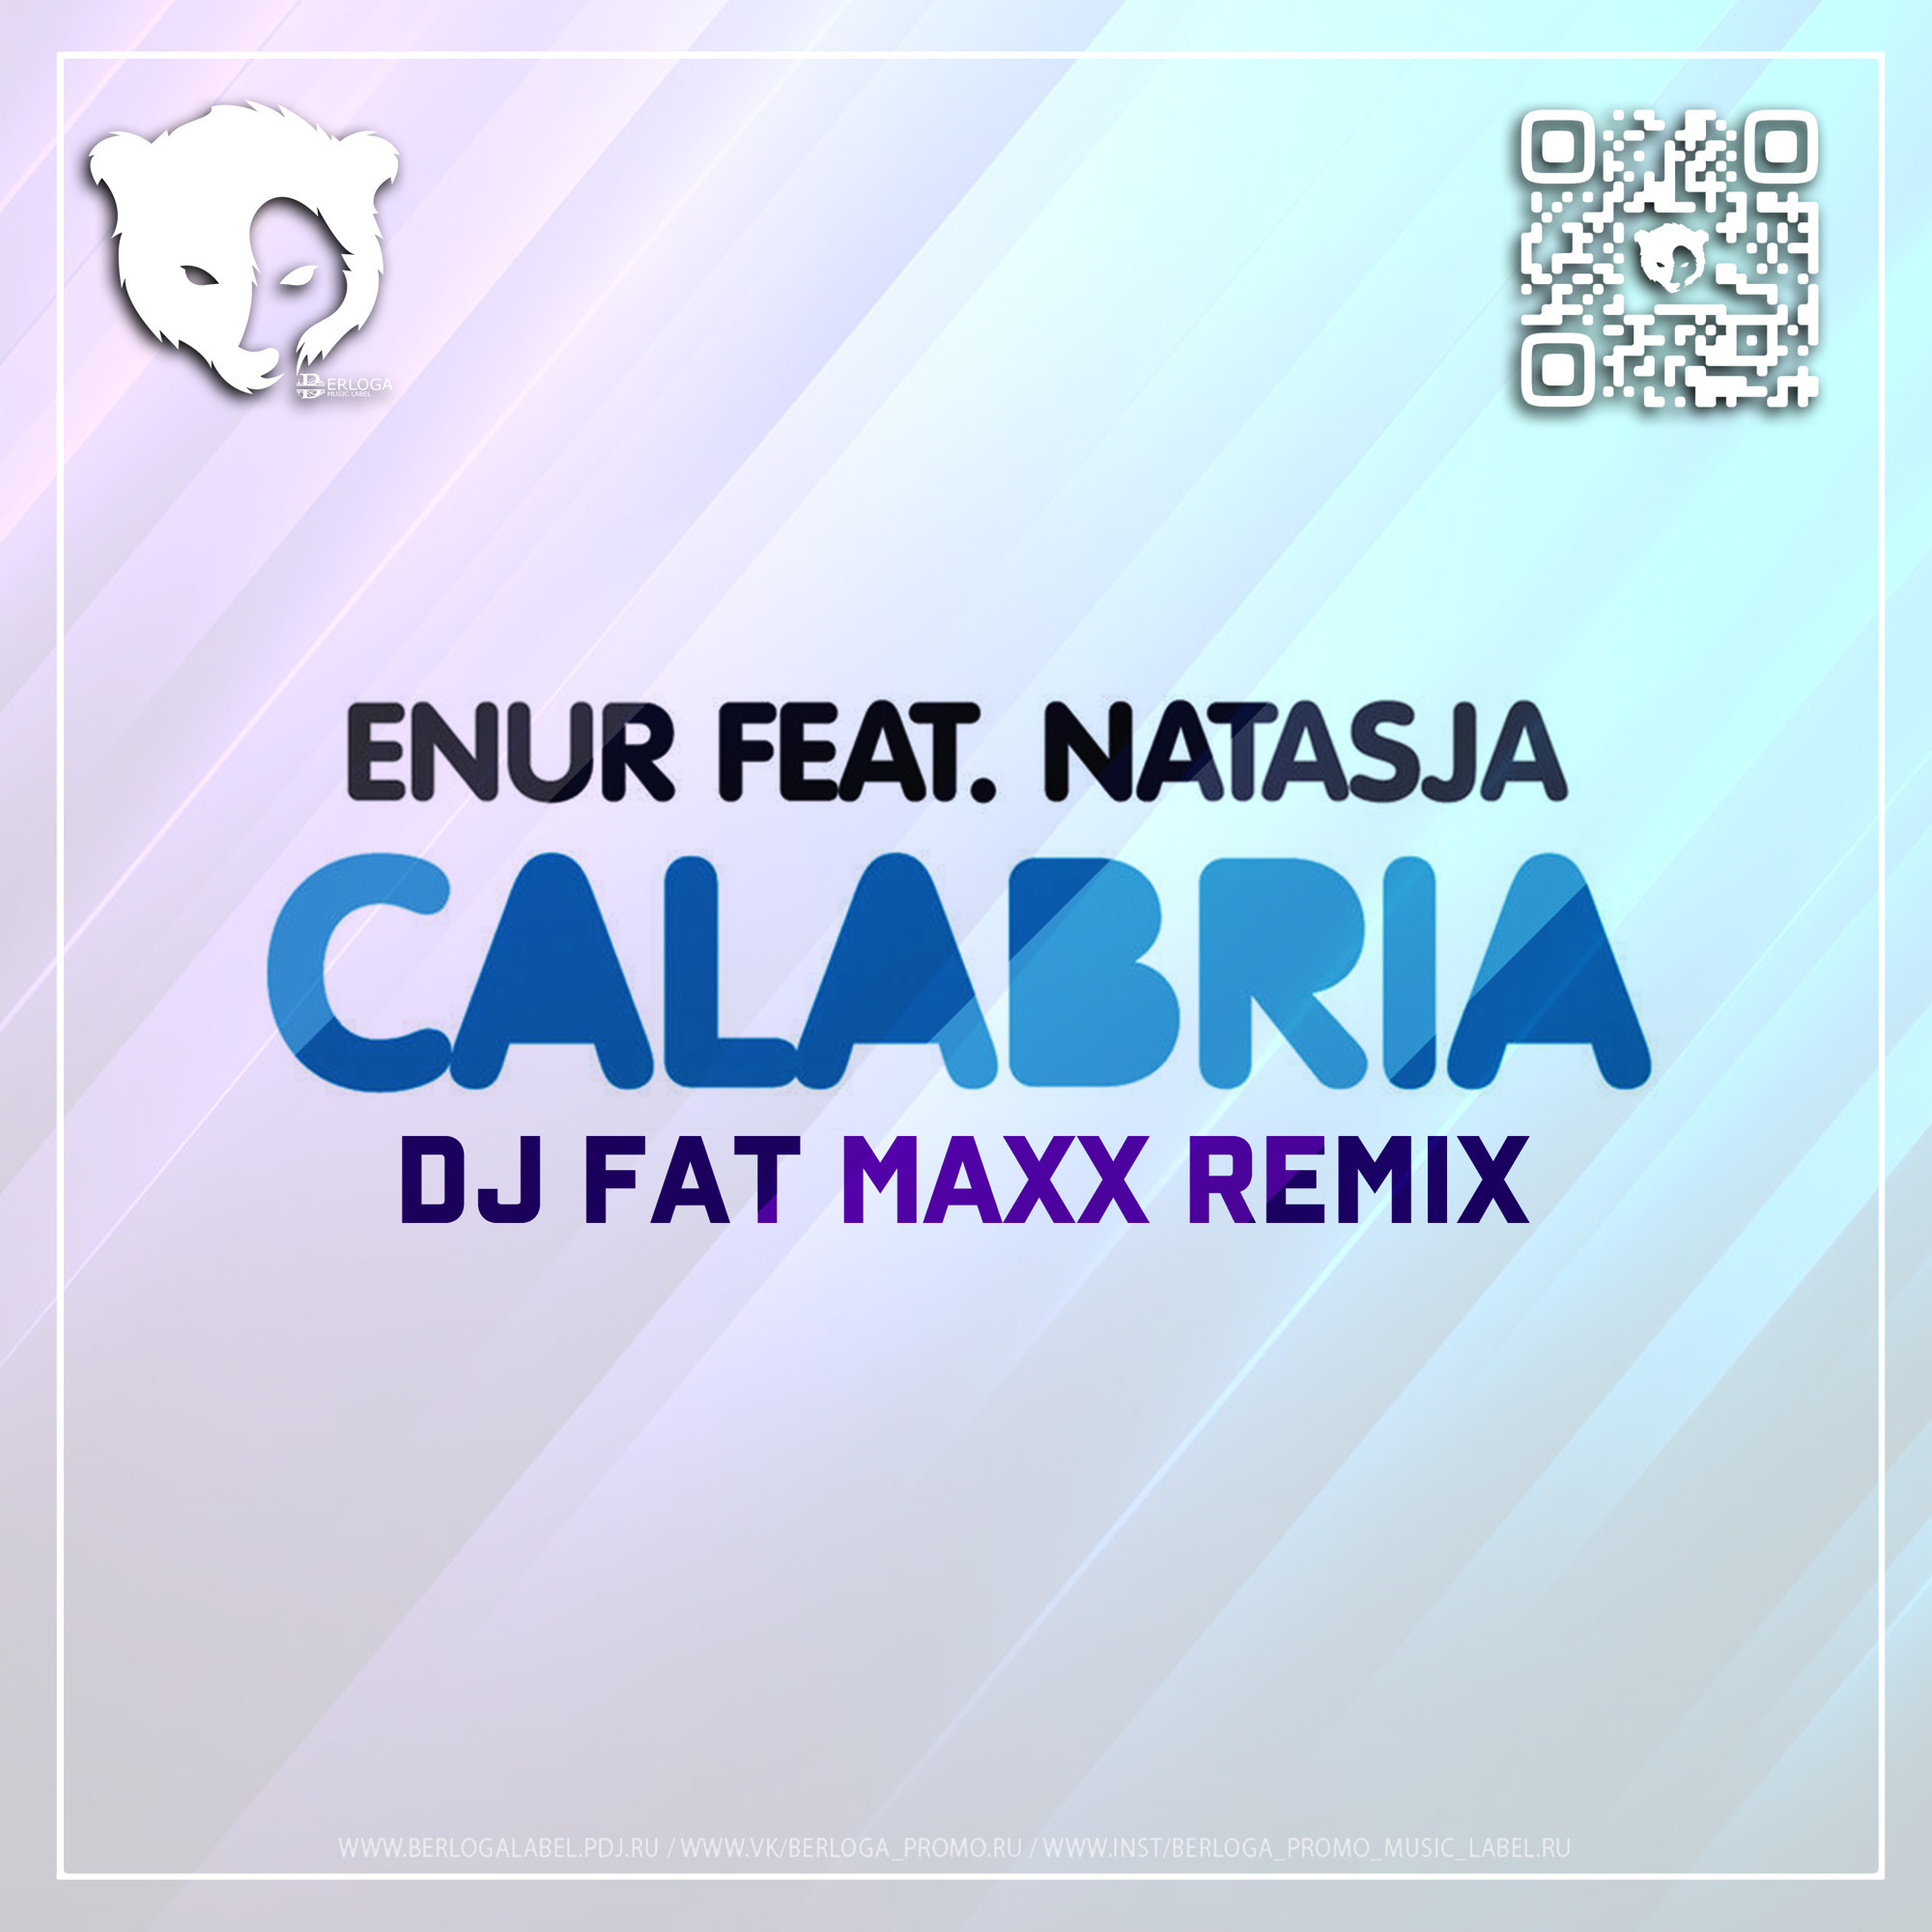 Subbota дым бомбим fat maxx remix. Enur feat. Natasja Calabria 2007. Enur x Natasja - Calabria (DJ fat Maxx Remix). Get a way - Original + Remixes Maxx.